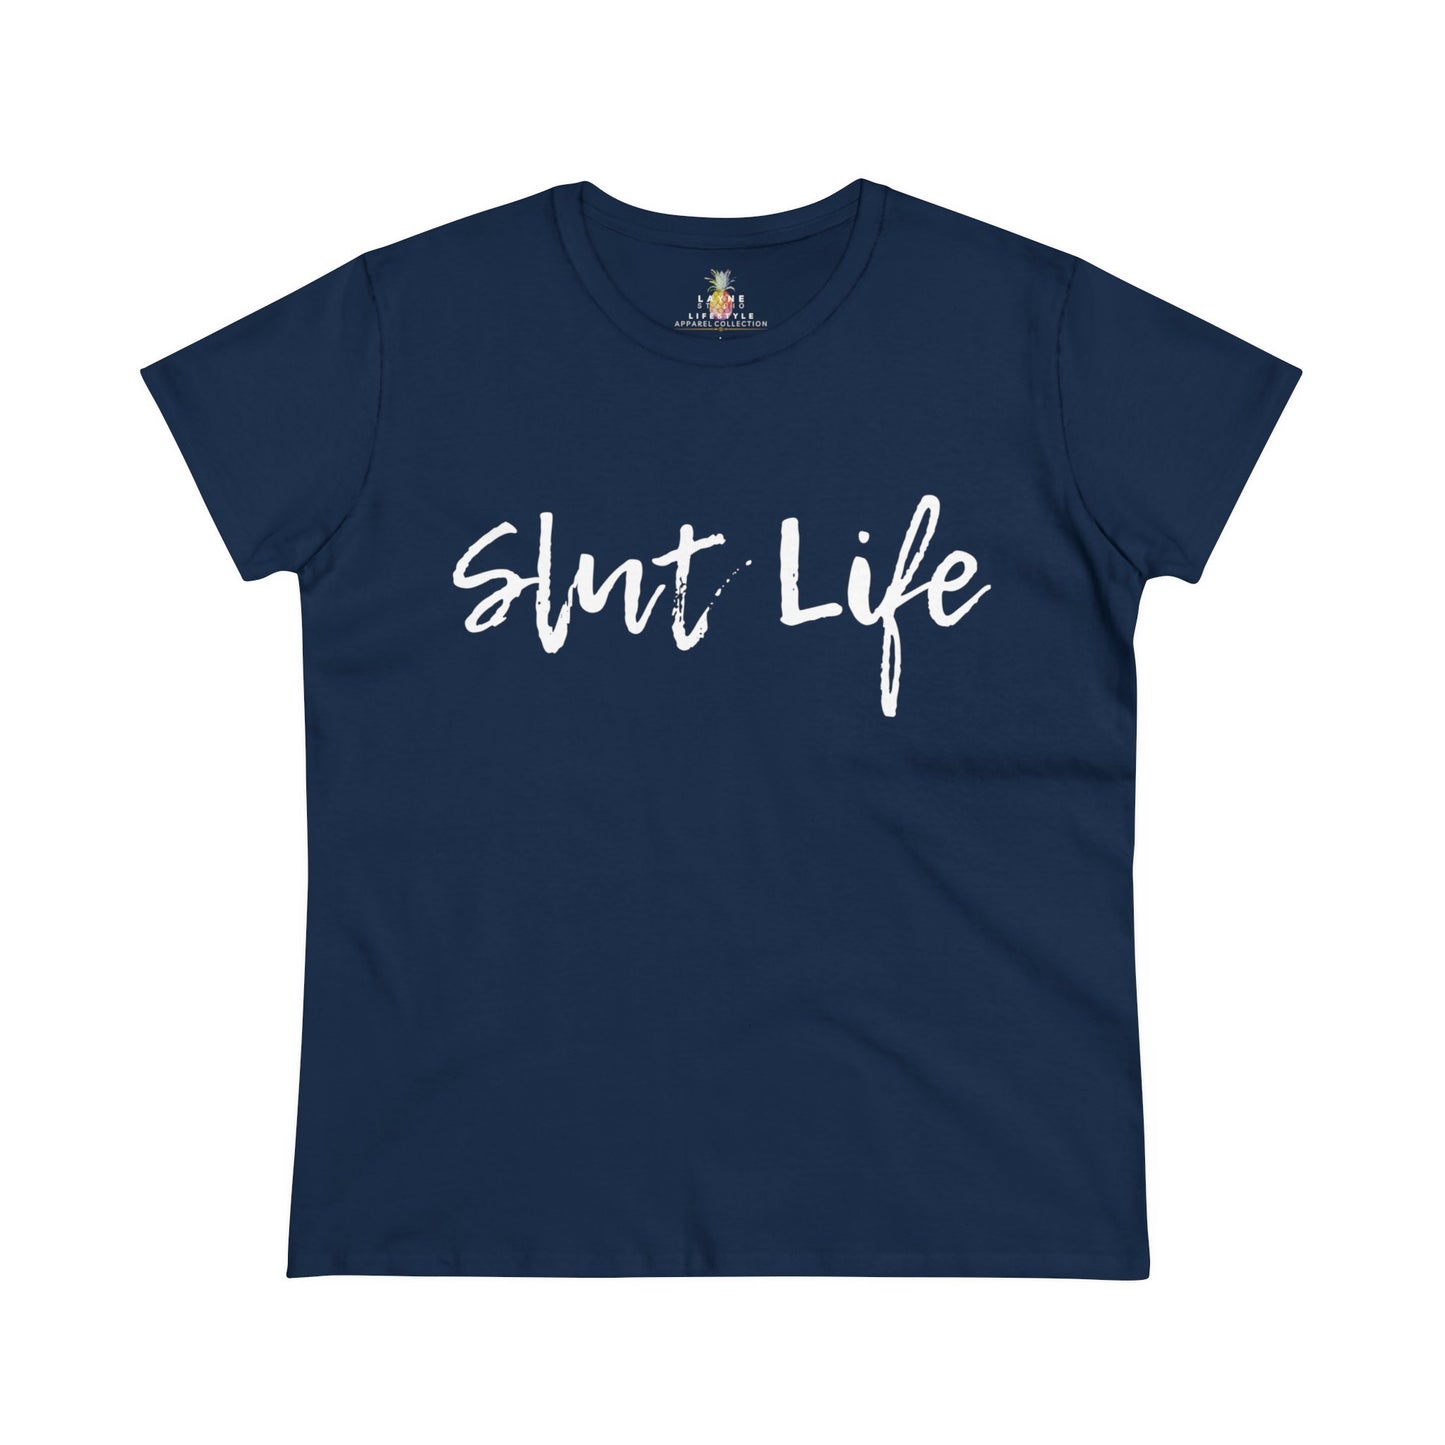 "Slut Life" (Salt Life Parody) Graphic Women's Midweight Cotton Tee